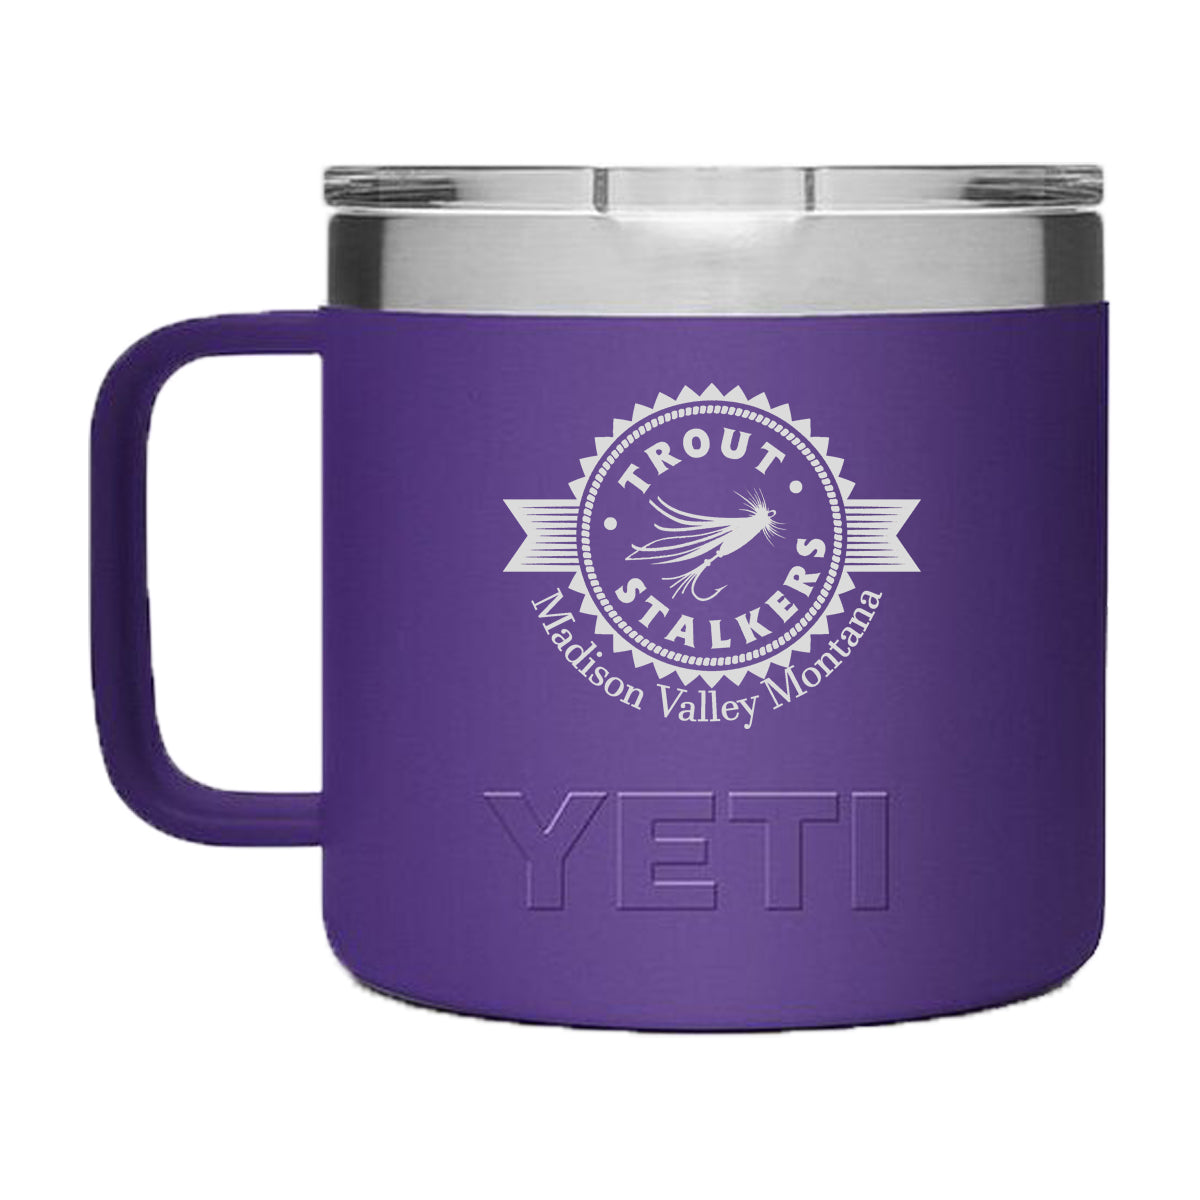 YETI - Rambler - 30oz - Peak Purple